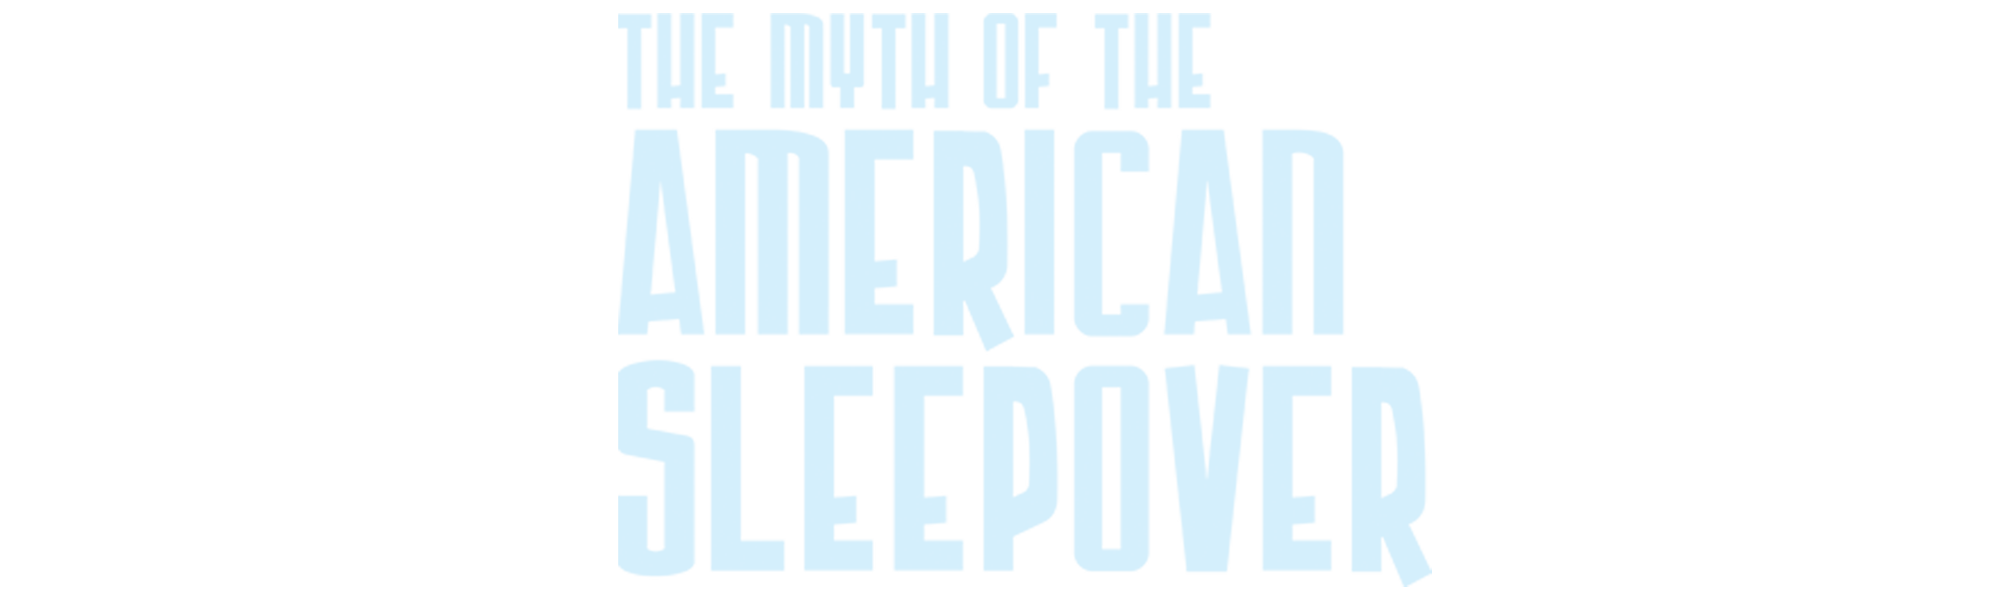 Myth of the American Sleepover